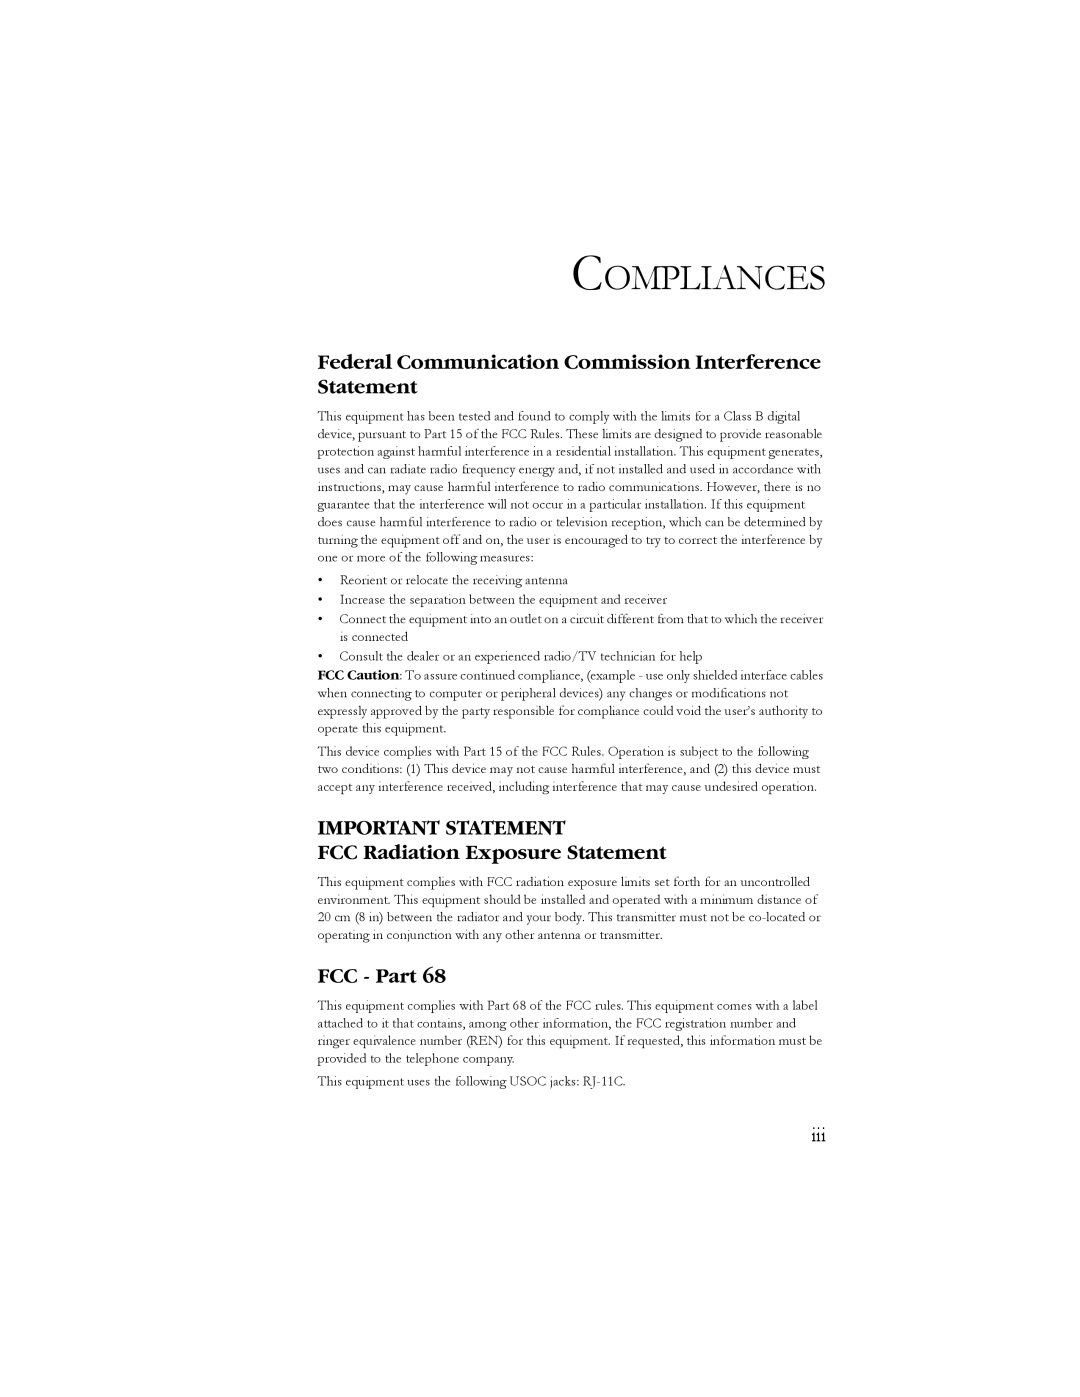 SMC Networks SMC7908VoWBRA manual Compliances, Federal Communication Commission Interference Statement, FCC - Part 